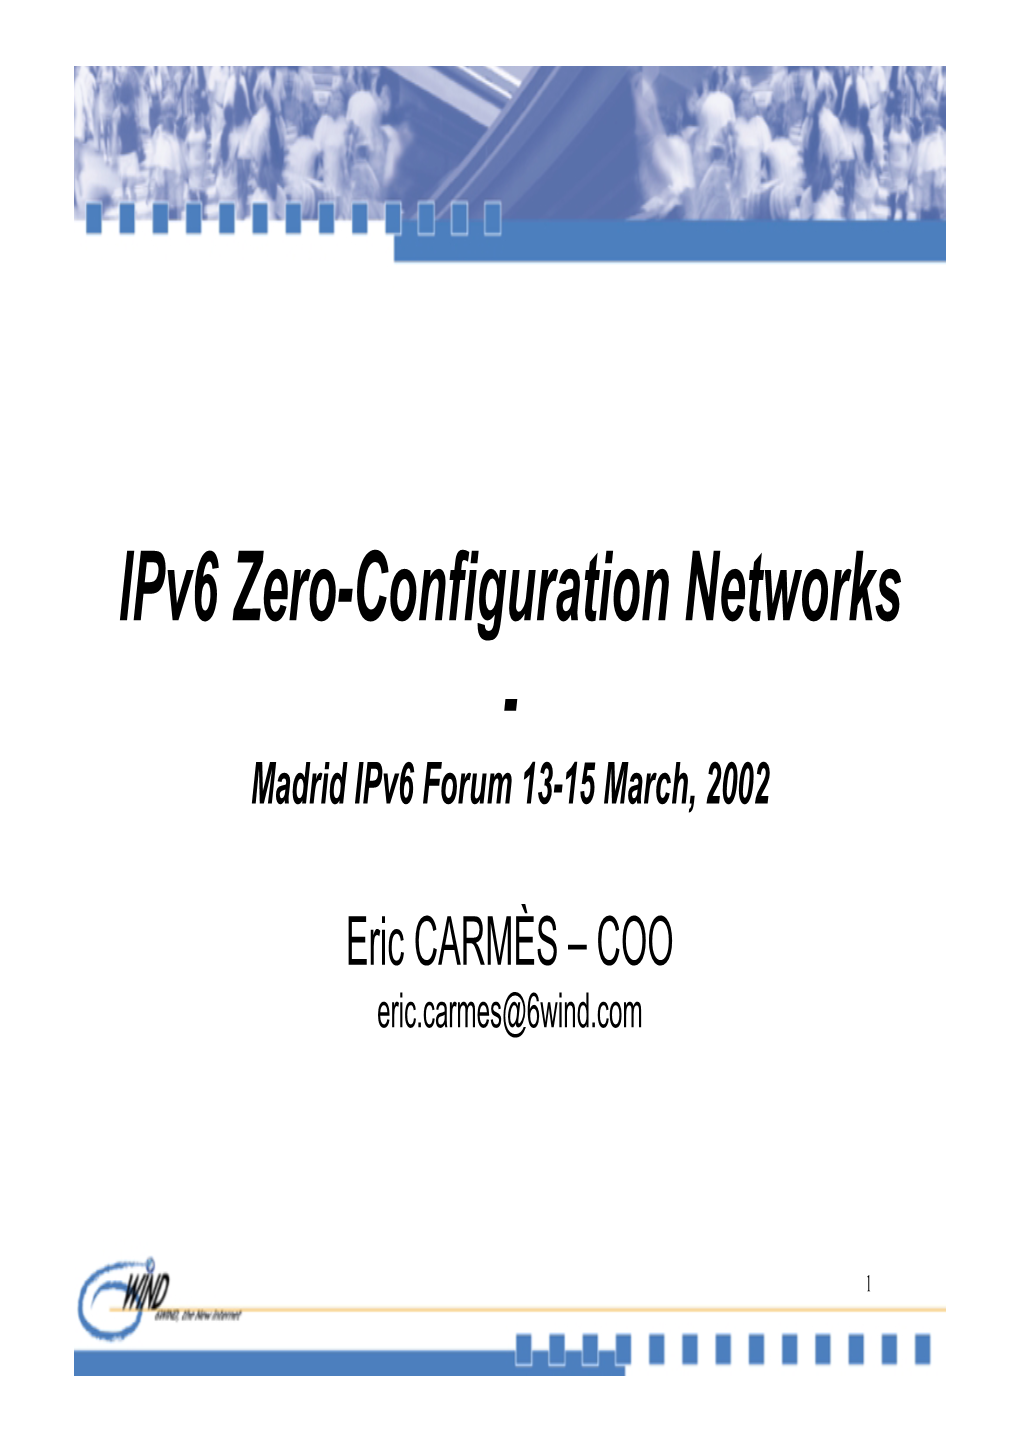 Ipv6 Zero-Configuration Networks - Madrid Ipv6 Forum 13-15 March, 2002